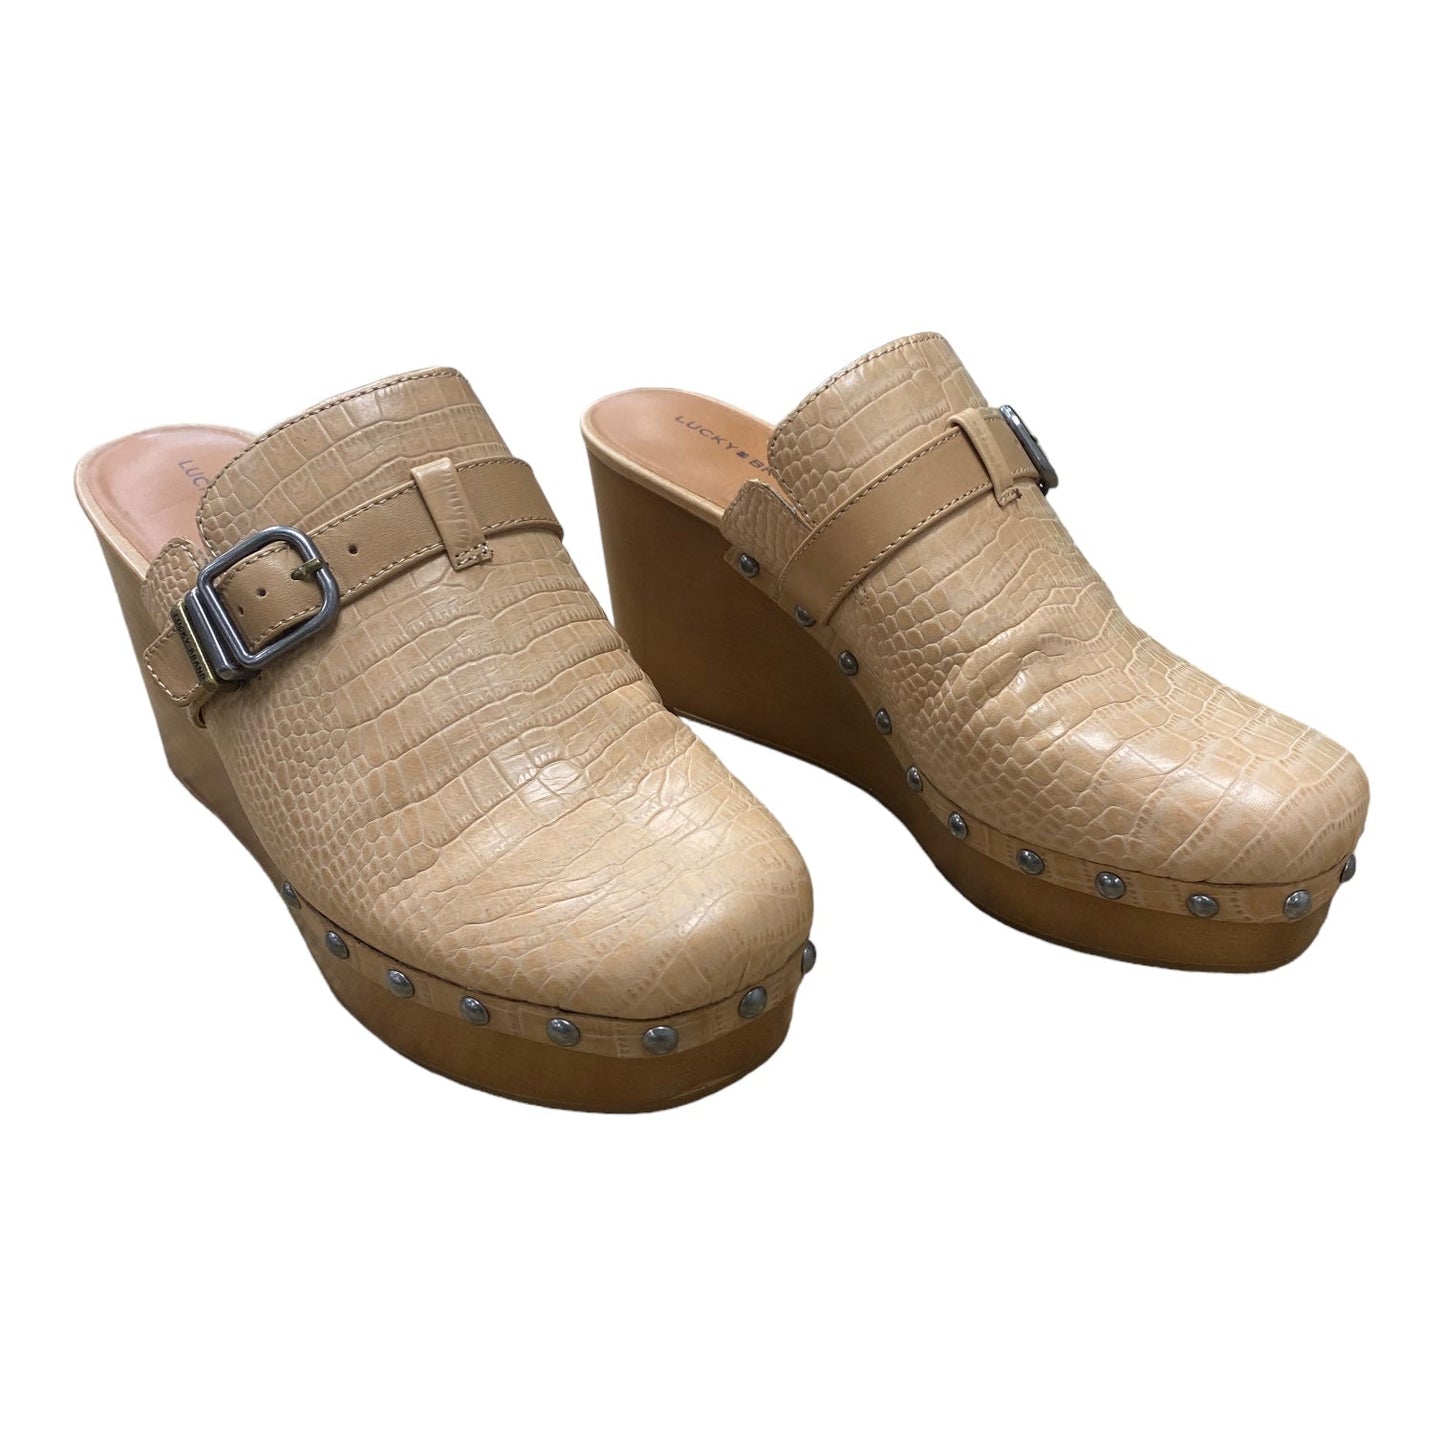 Tan Shoes Heels Platform Lucky Brand, Size 10